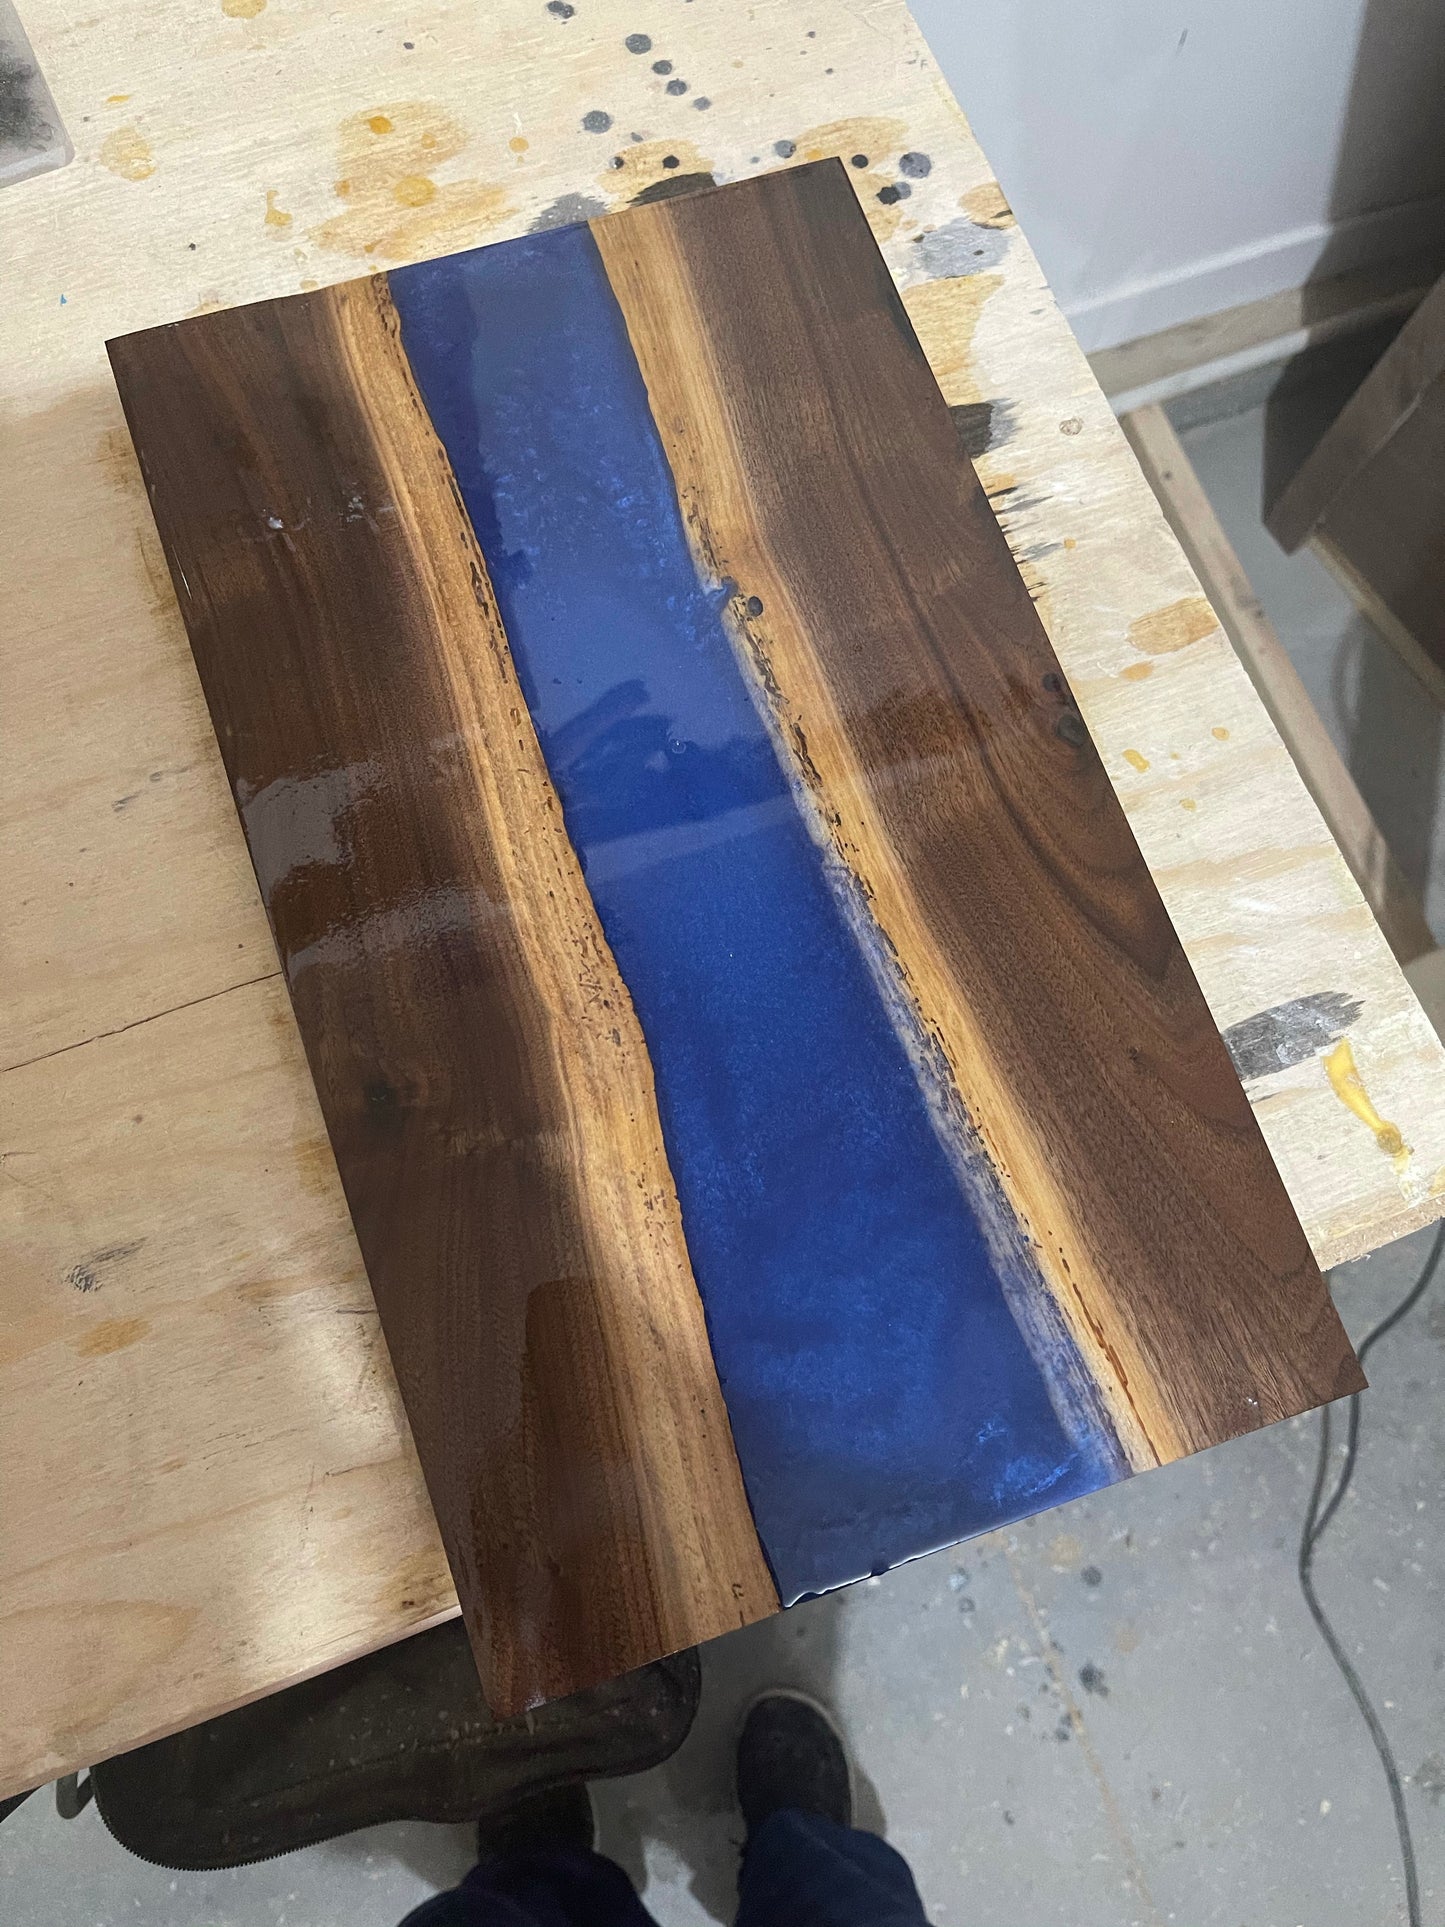 River resin serving boards